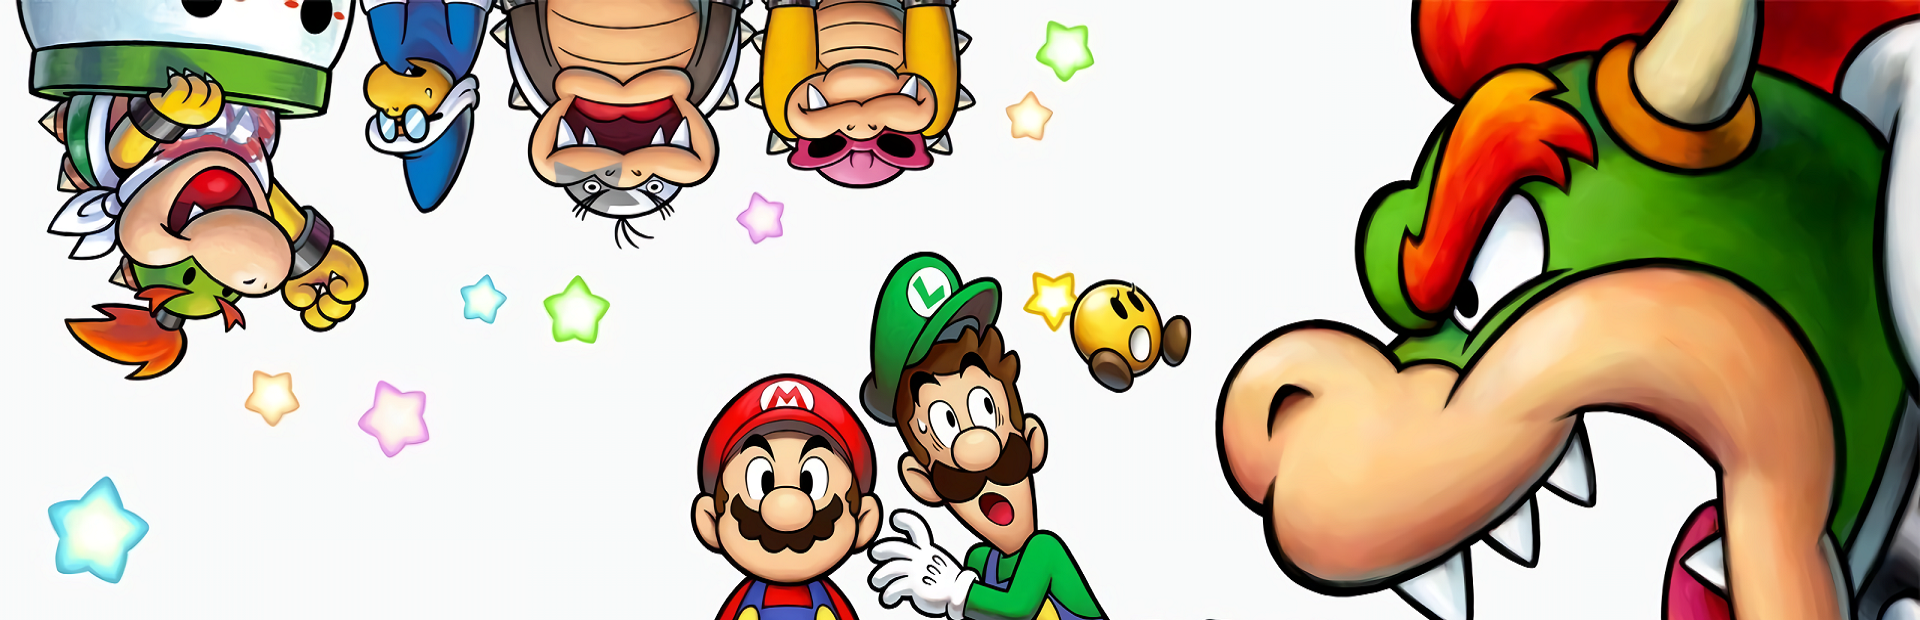 Марио и Луиджи и Боузер. Марио и Луиджи Боузер инсайд стори. Mario & Luigi: Bowser’s inside story + Bowser Jr .’s Journey. Марио Bowser inside story.